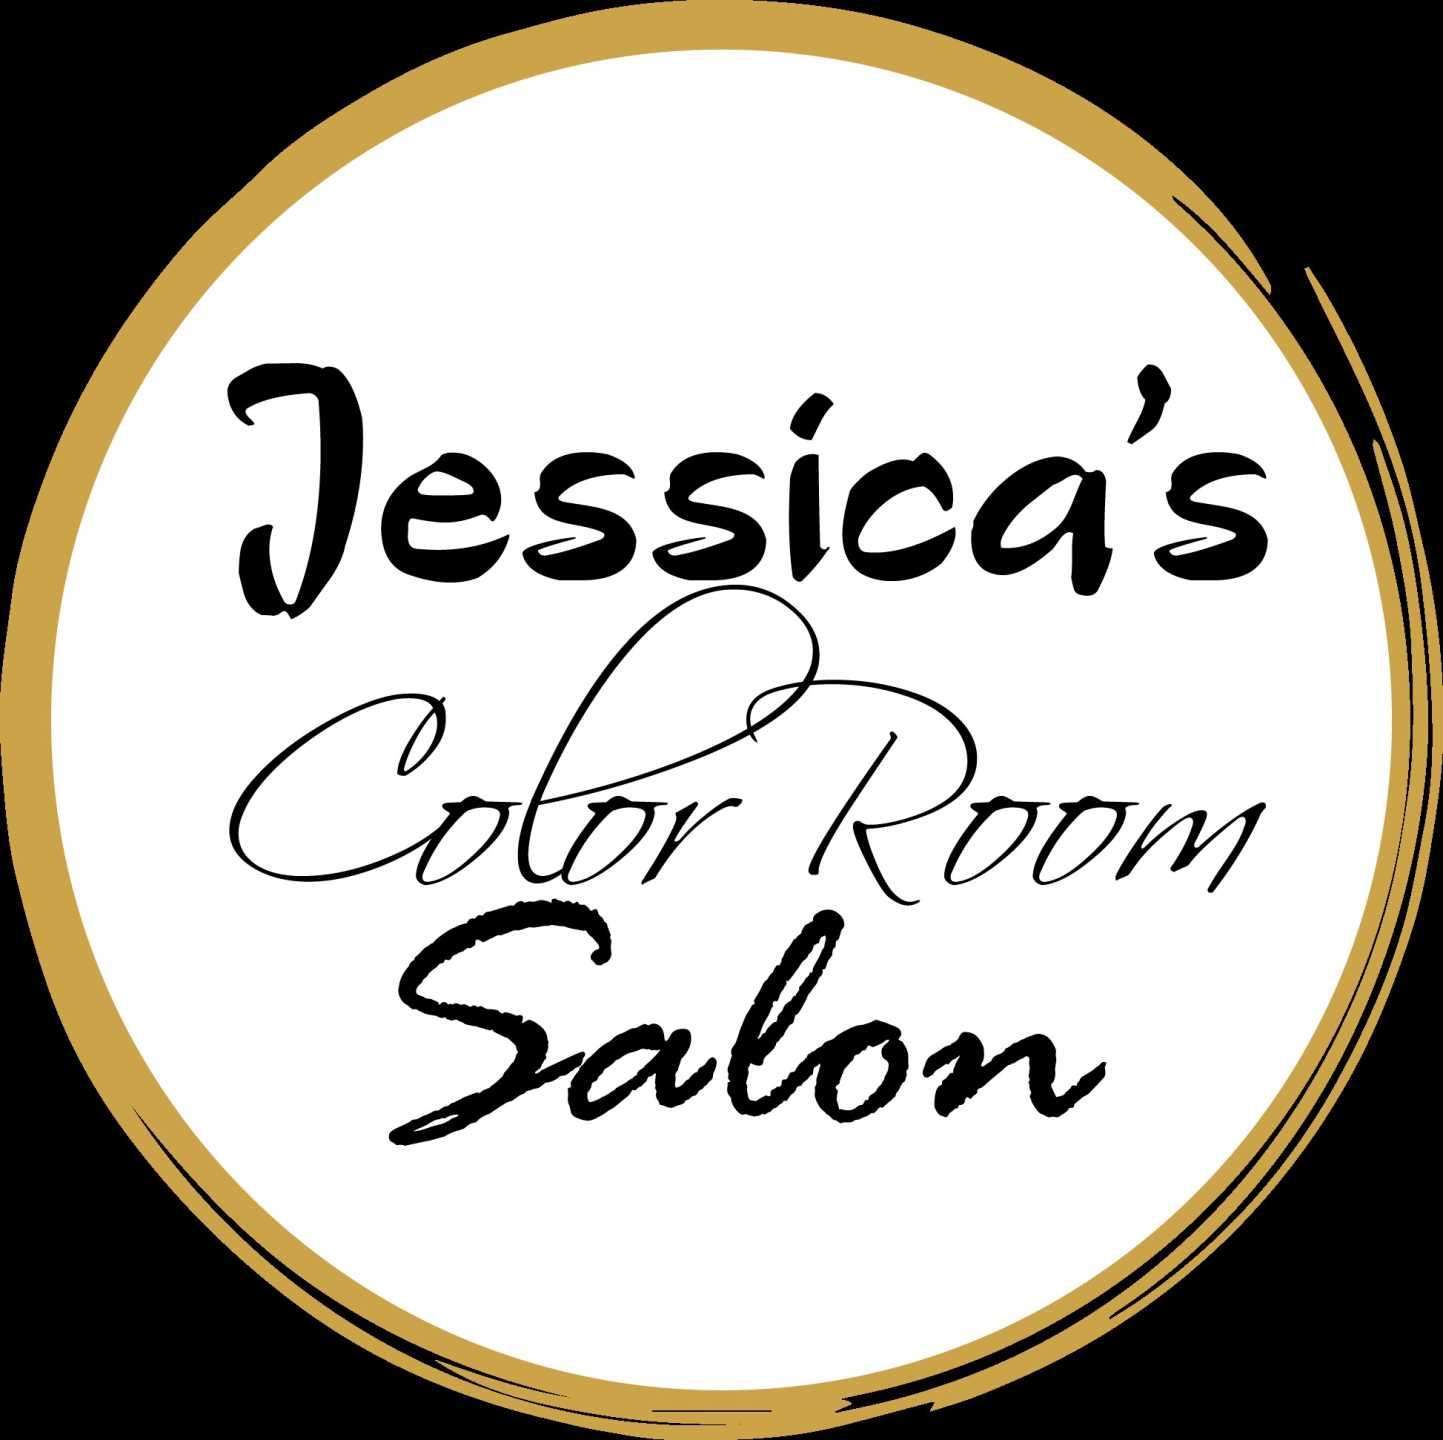 Jessica's Color Room Salon Logo